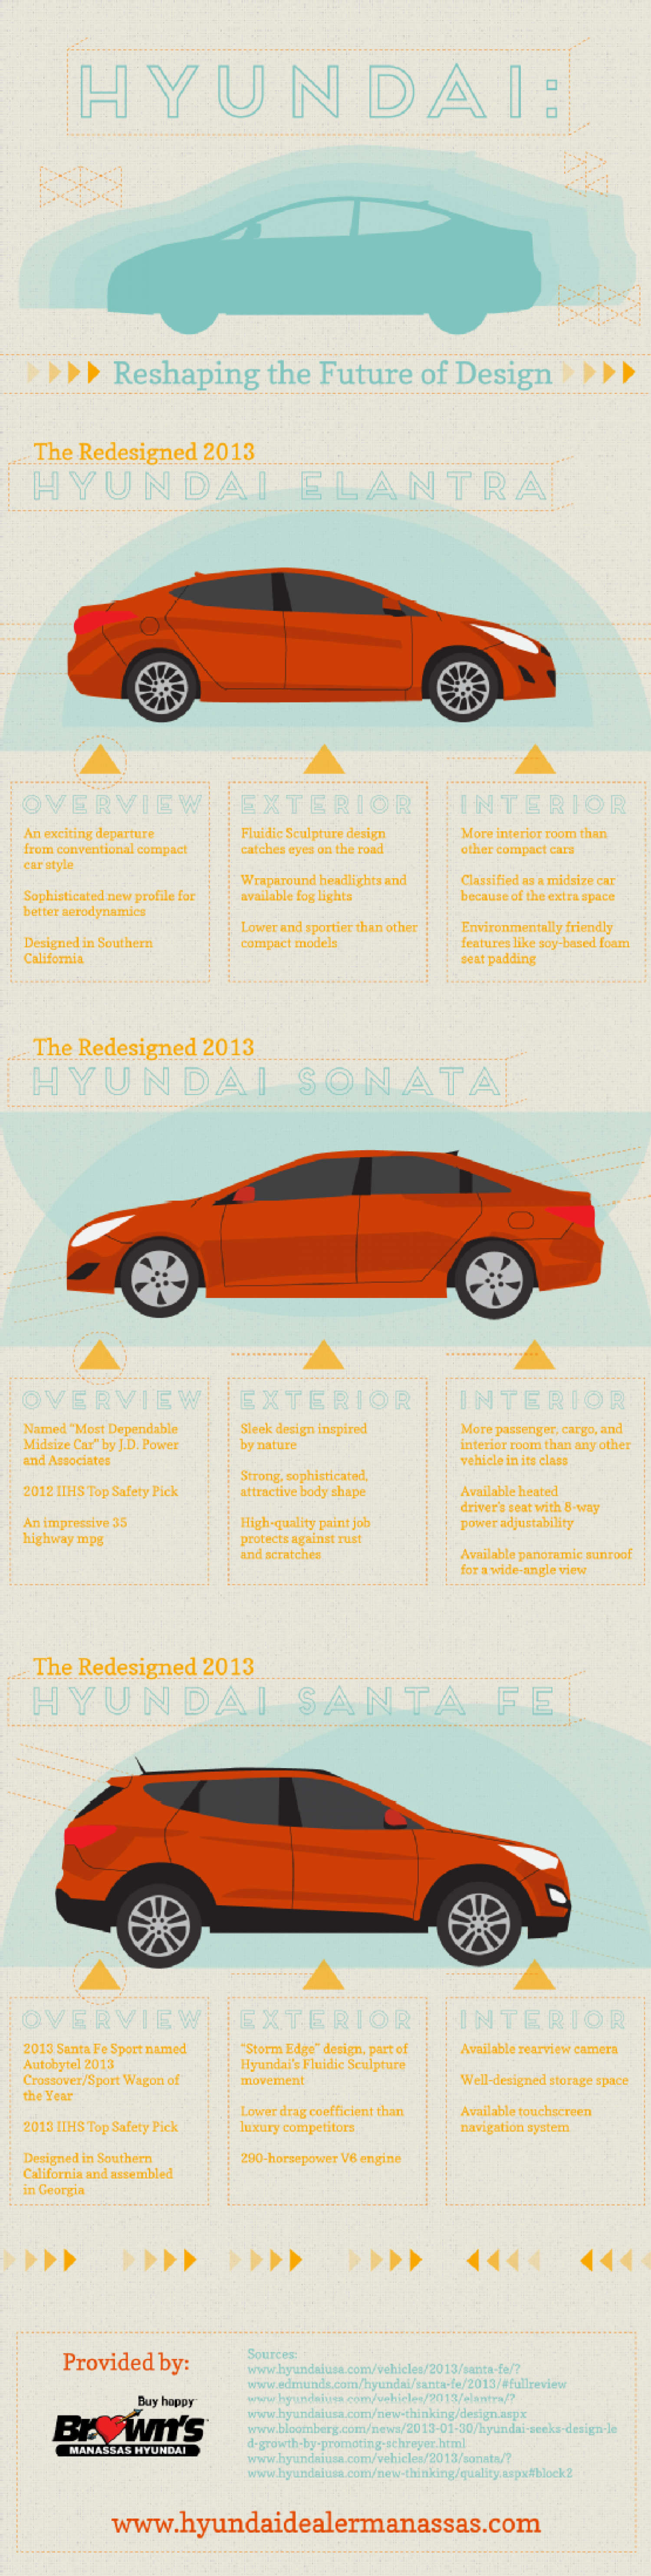 Hyundai: Reshaping the Future of Design Infographic